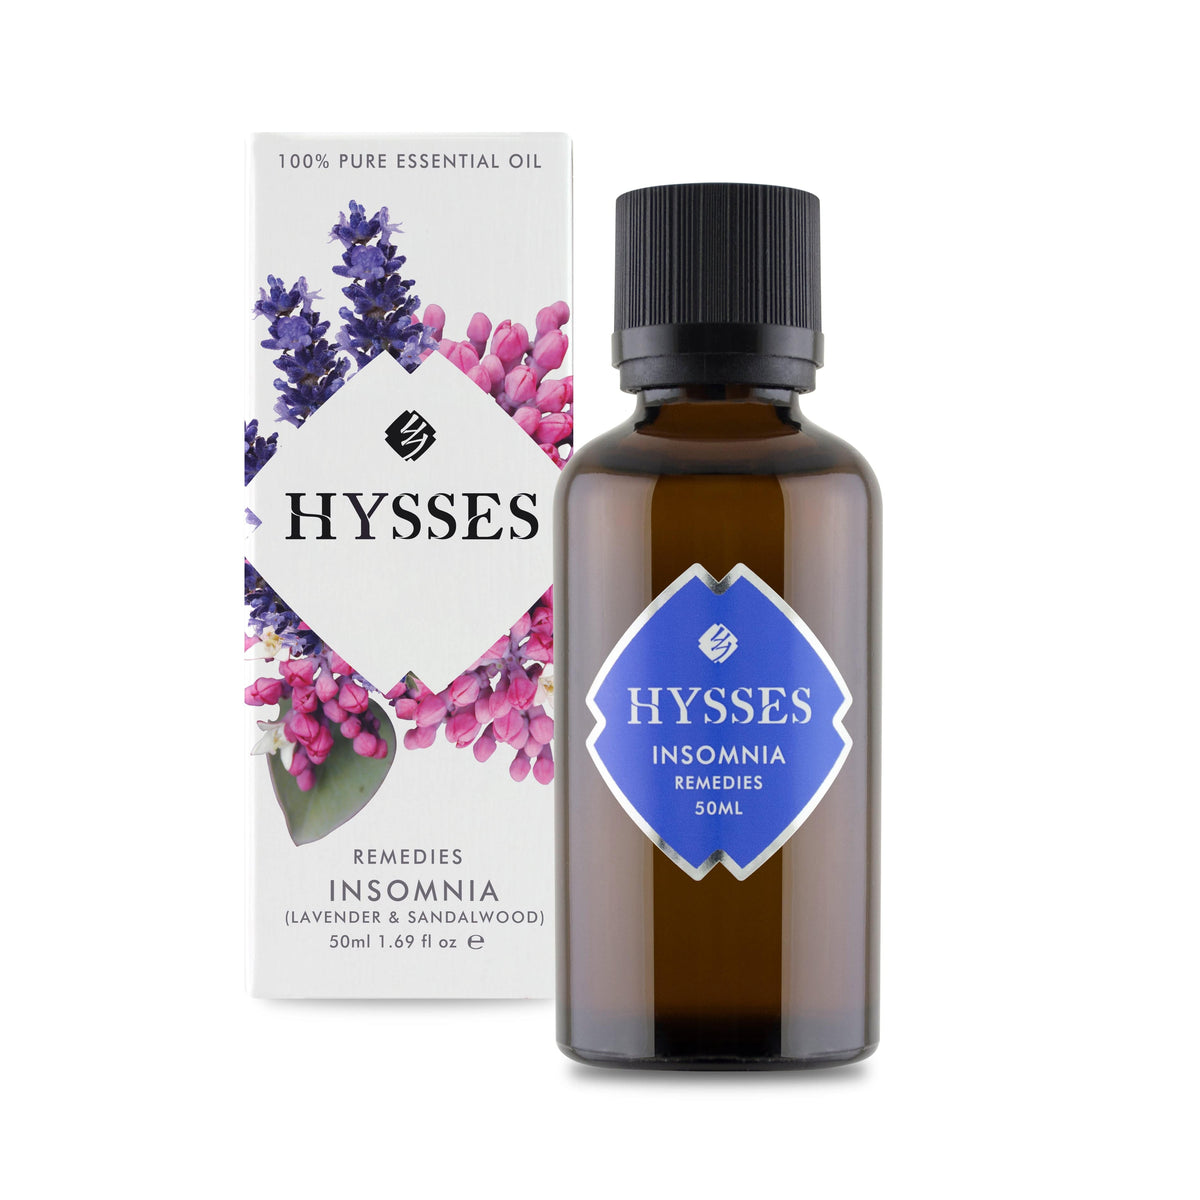 Hysses Essential Oil 50ml Remedies, Insomnia (Lavender &amp; Sandalwood)